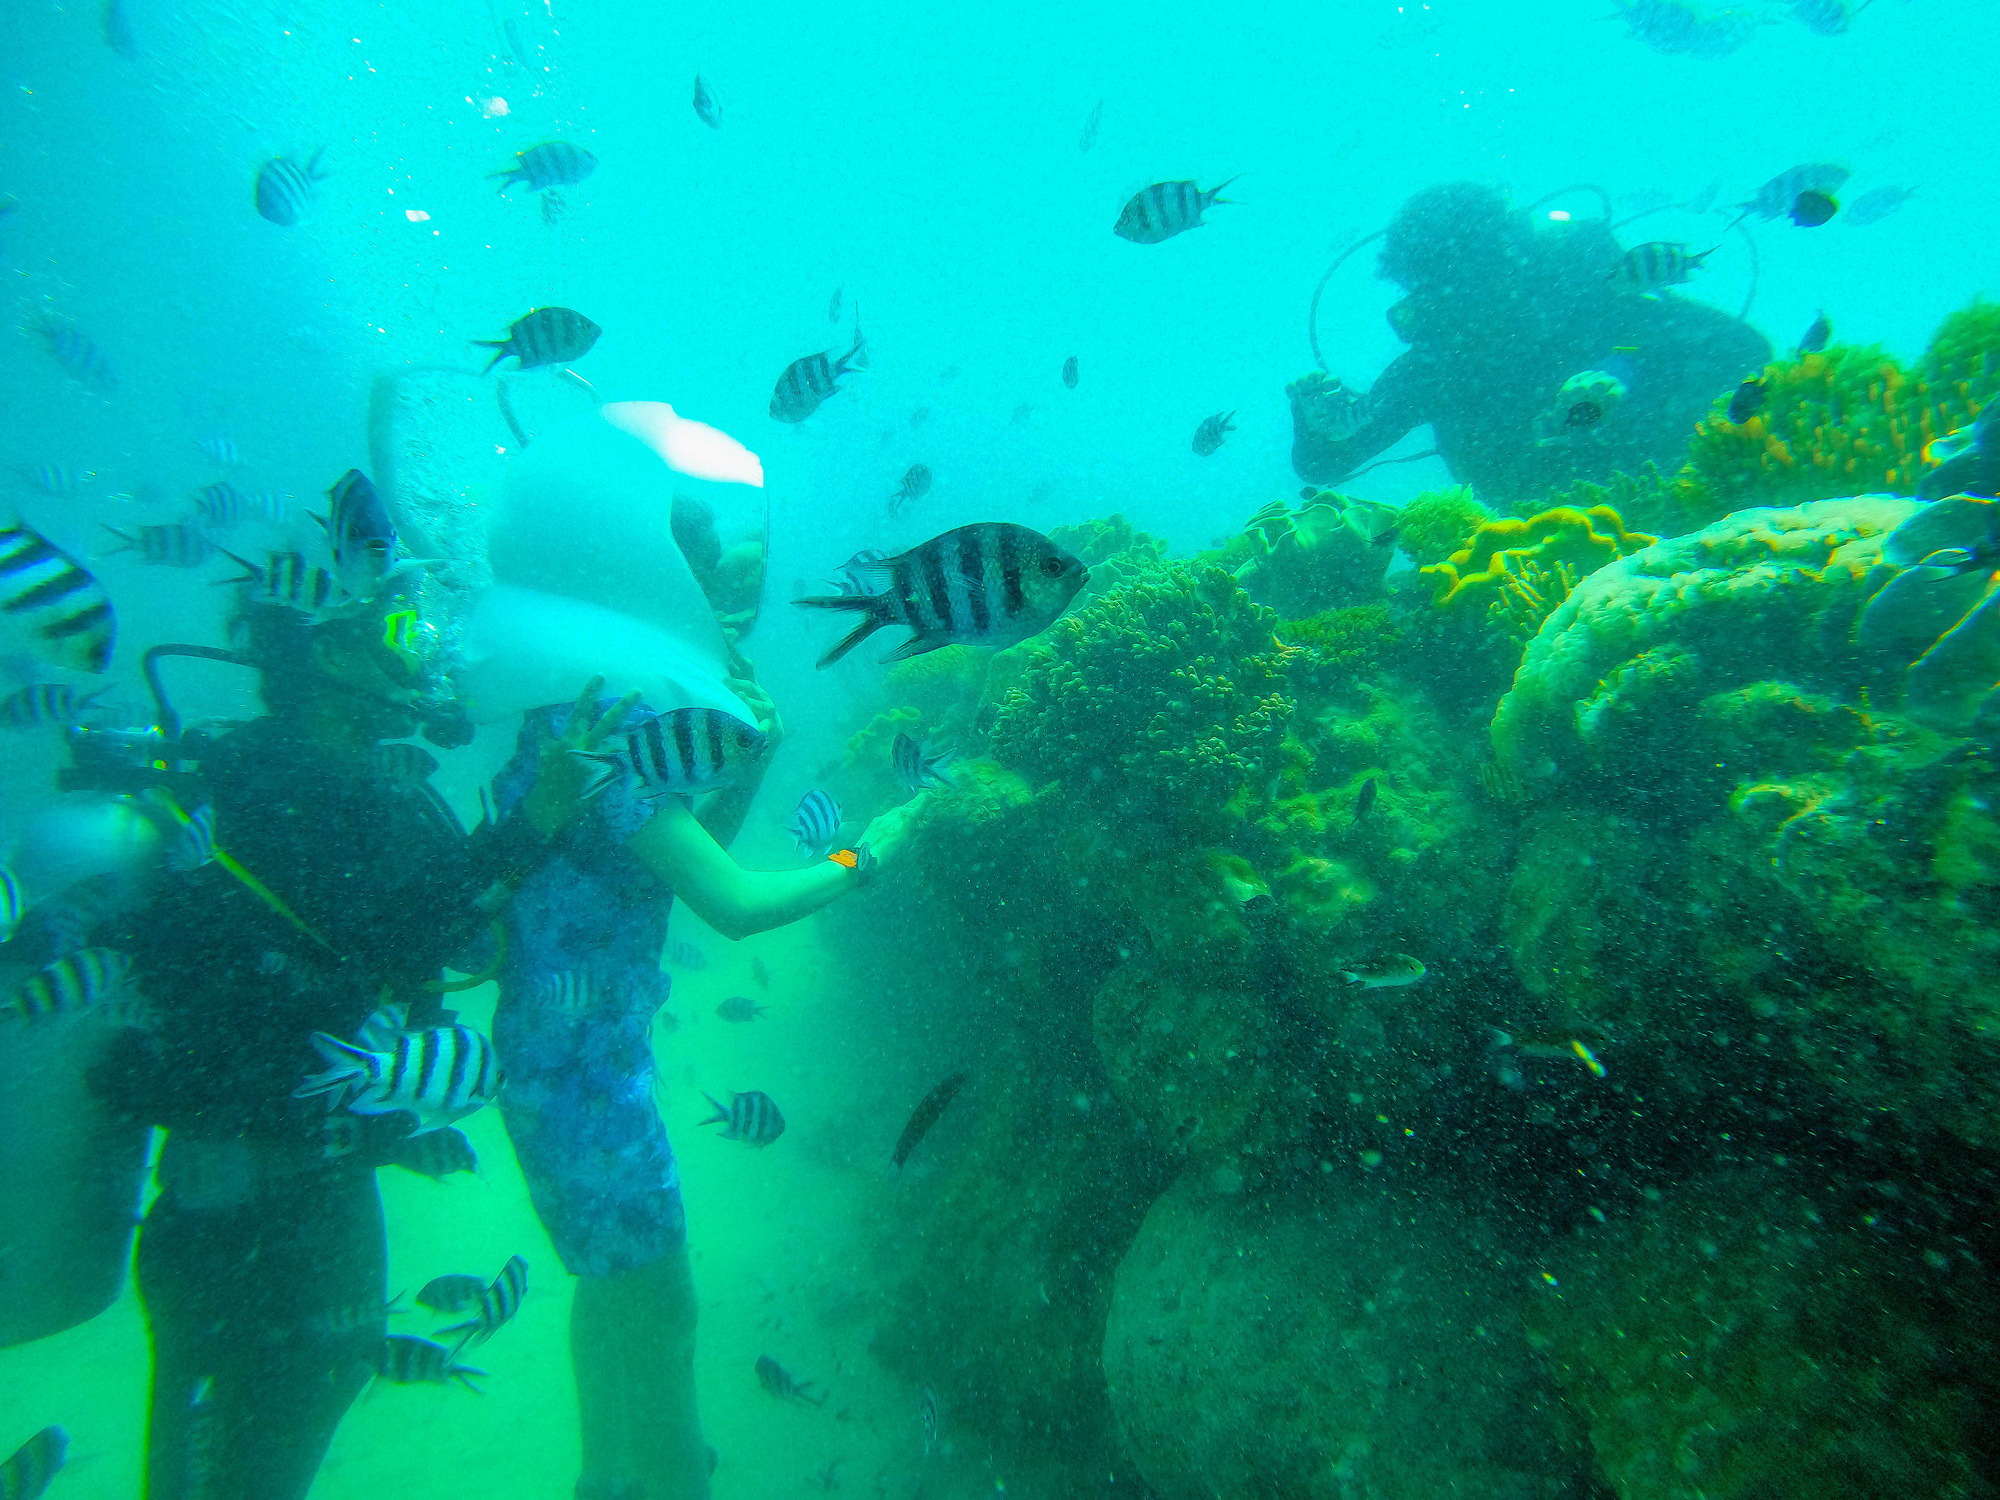 Take a walk into the wonderful underwater world near Vietnam’s Phu Quoc Island